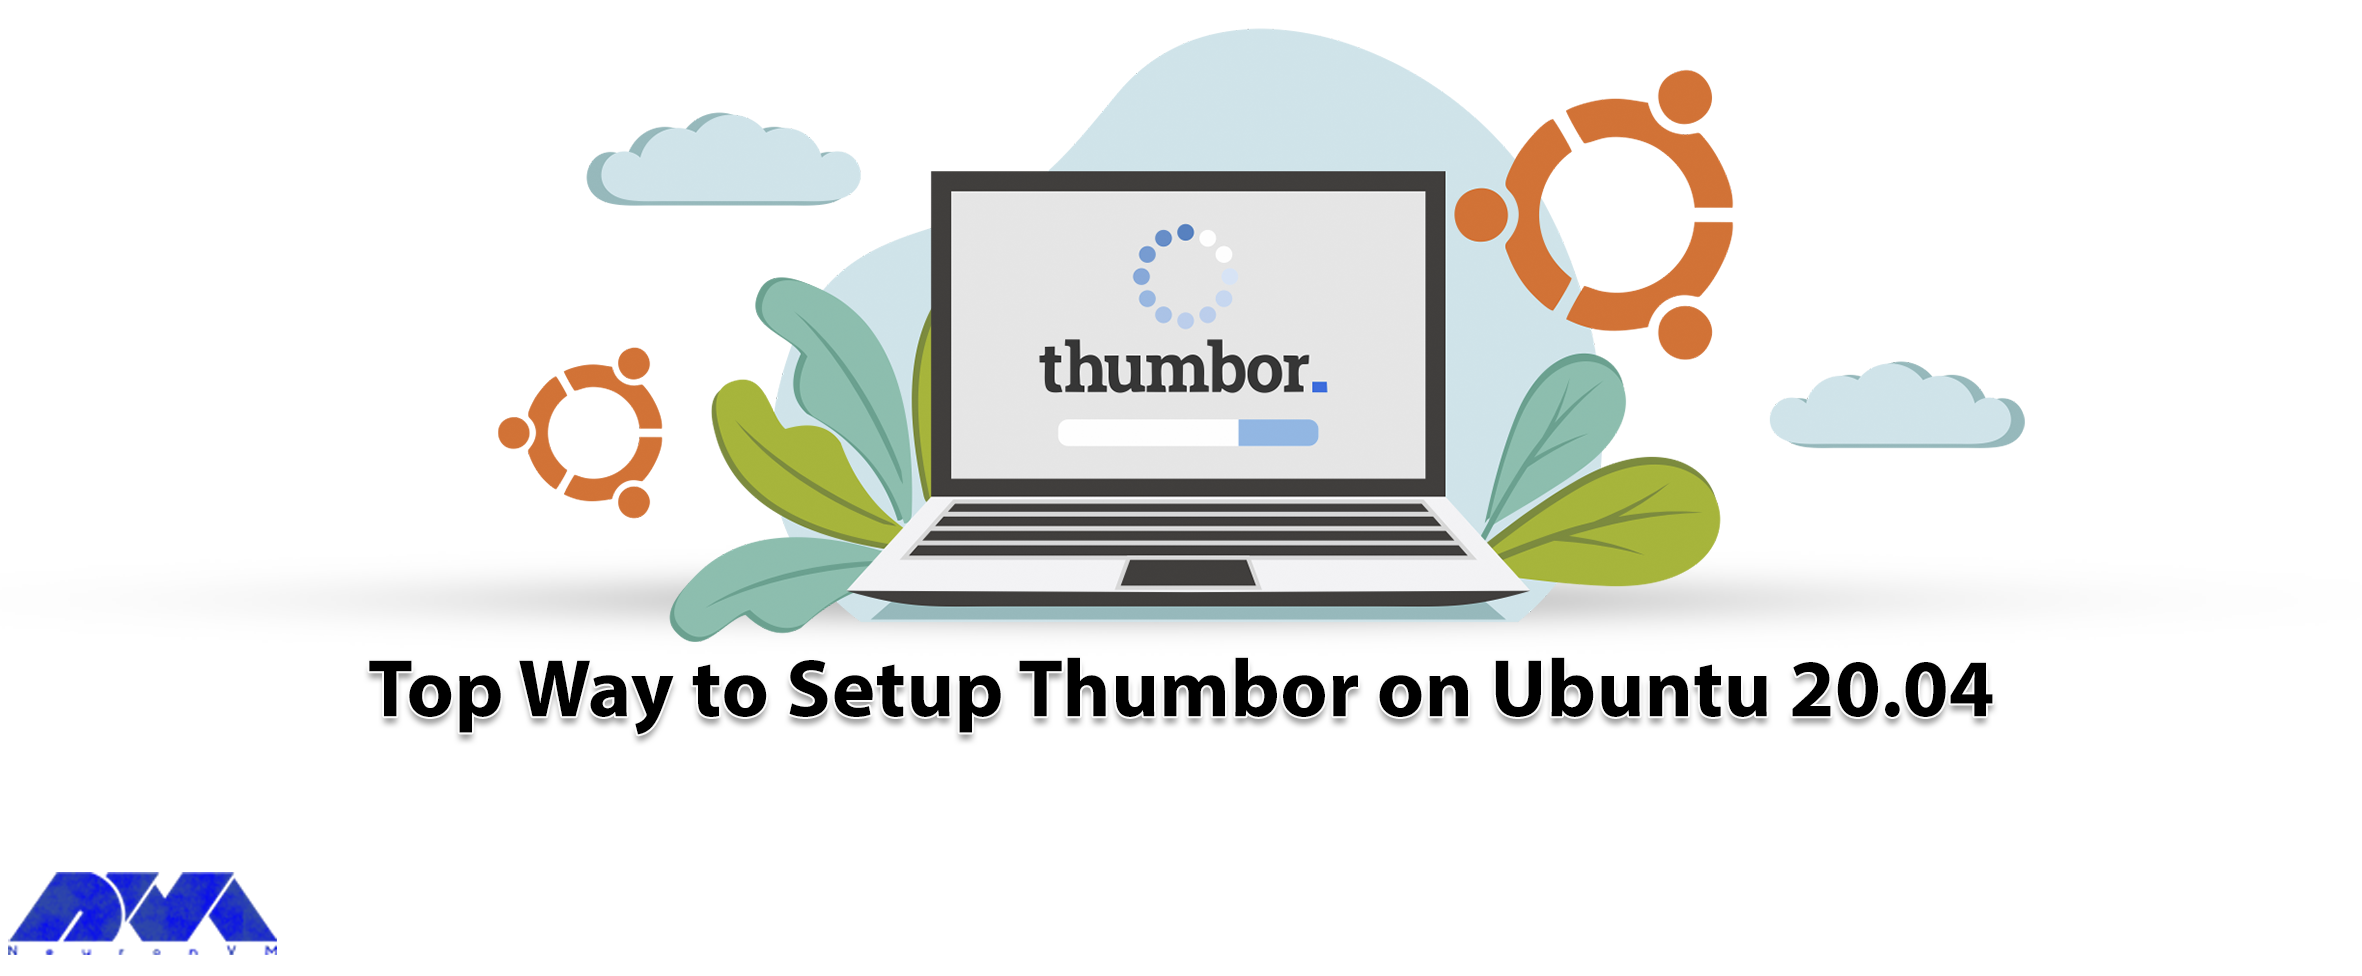 The Top Way to Setup Thumbor on Ubuntu 20.04 - NeuronVM